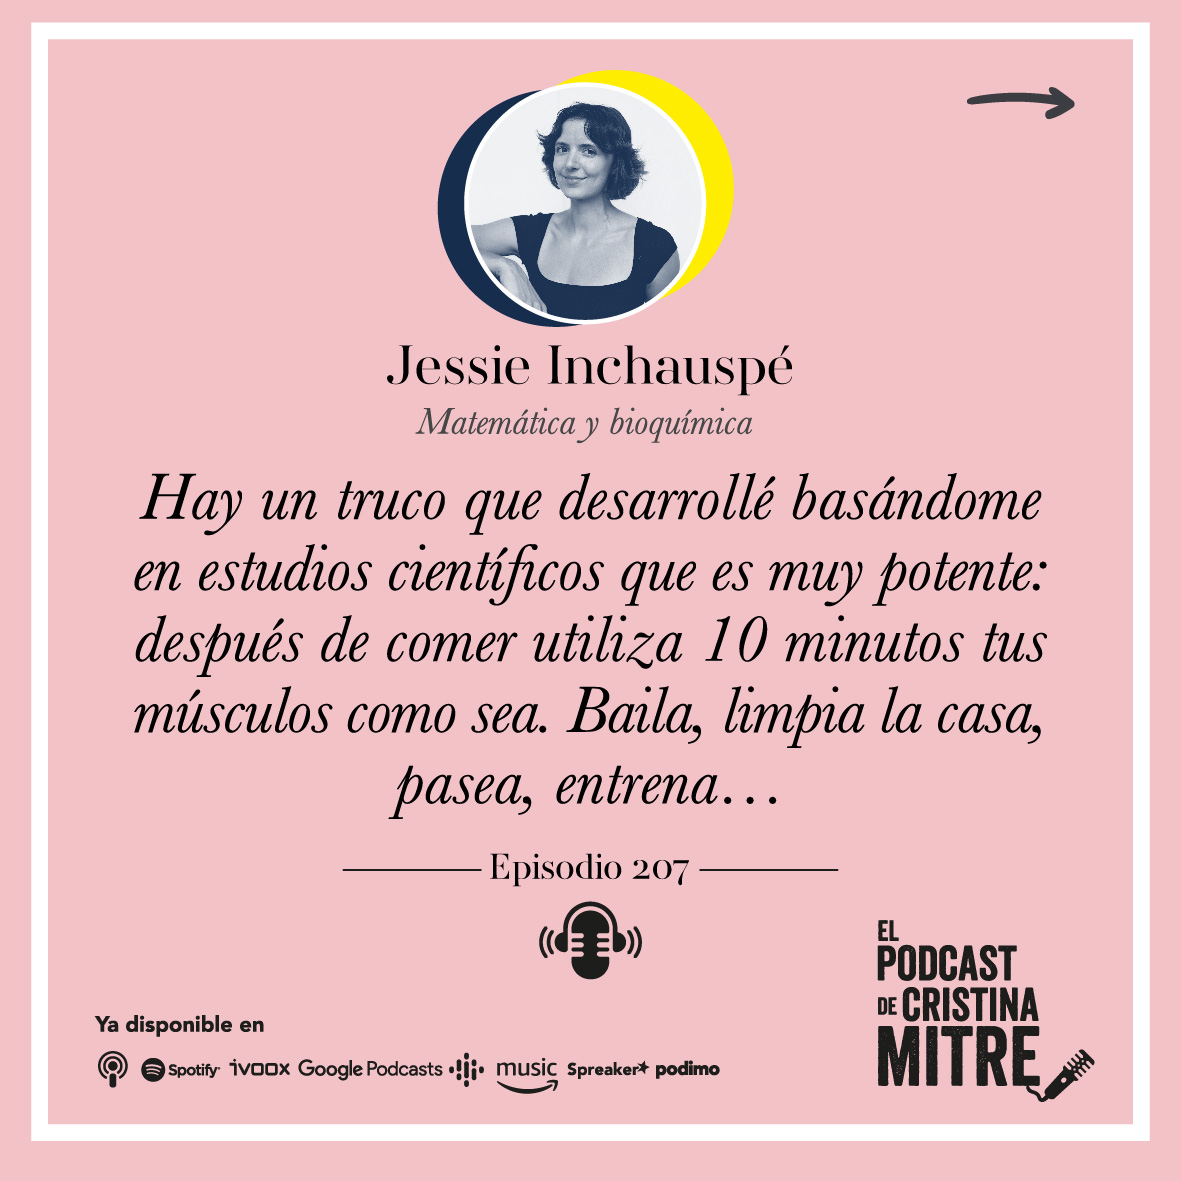 El podcast de Cristina Mitre Jessie Inchauspe dieta